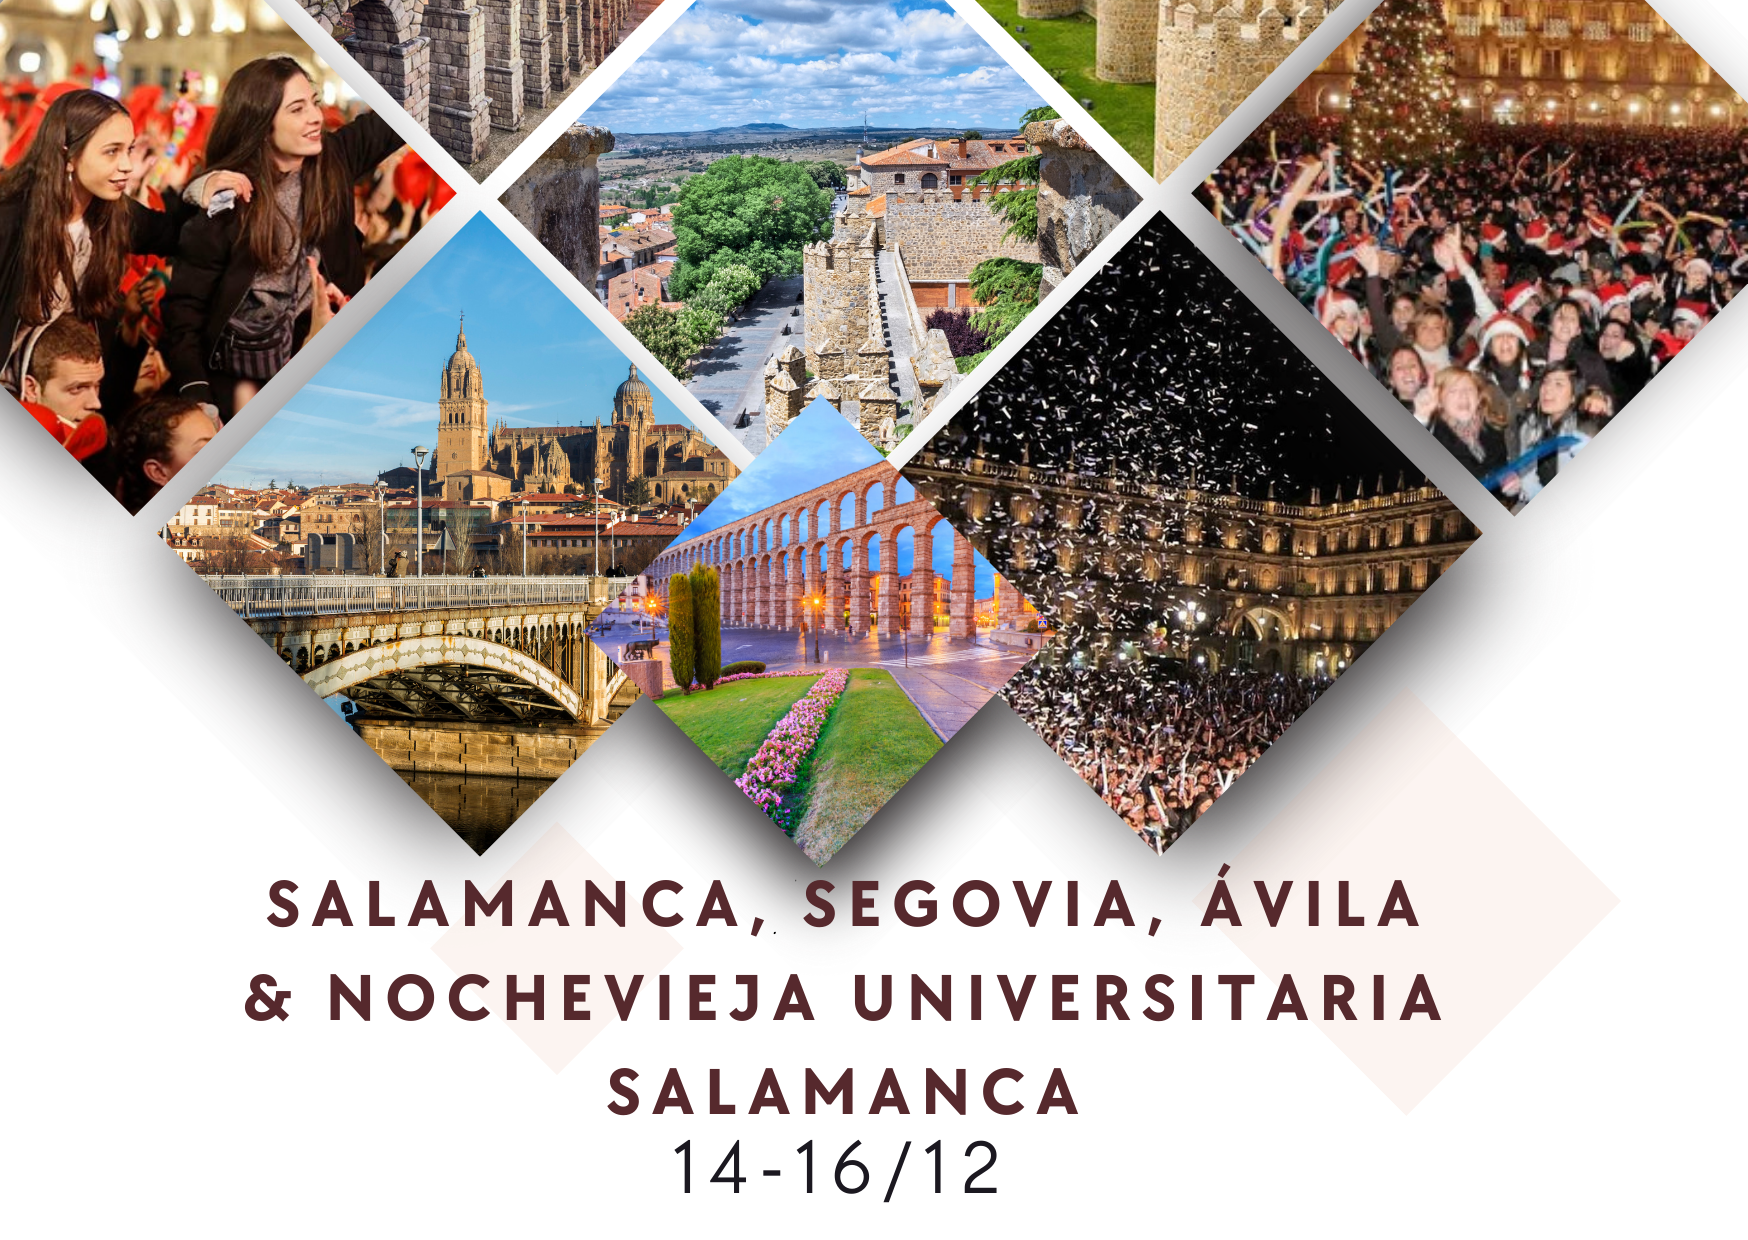 z2- Salamanca, Segovia, Ávila & Nochevieja Universitaria Salamanca| Coming Soon